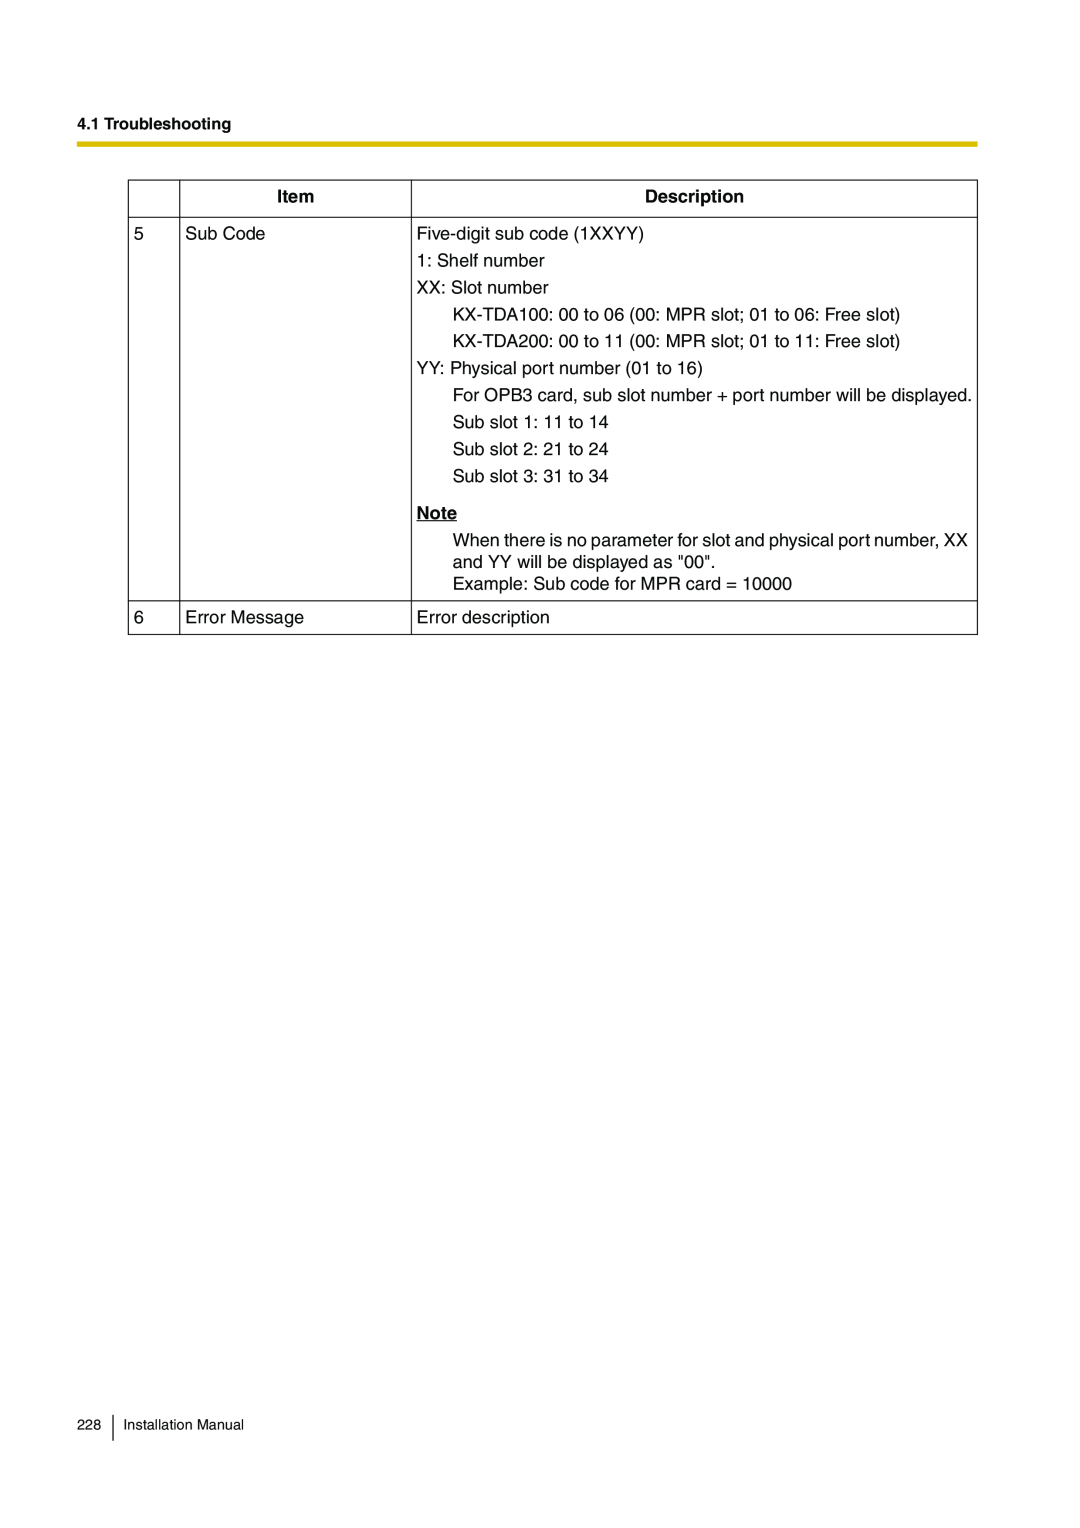 Panasonic KX-TDA100 installation manual Description, Sub Code 